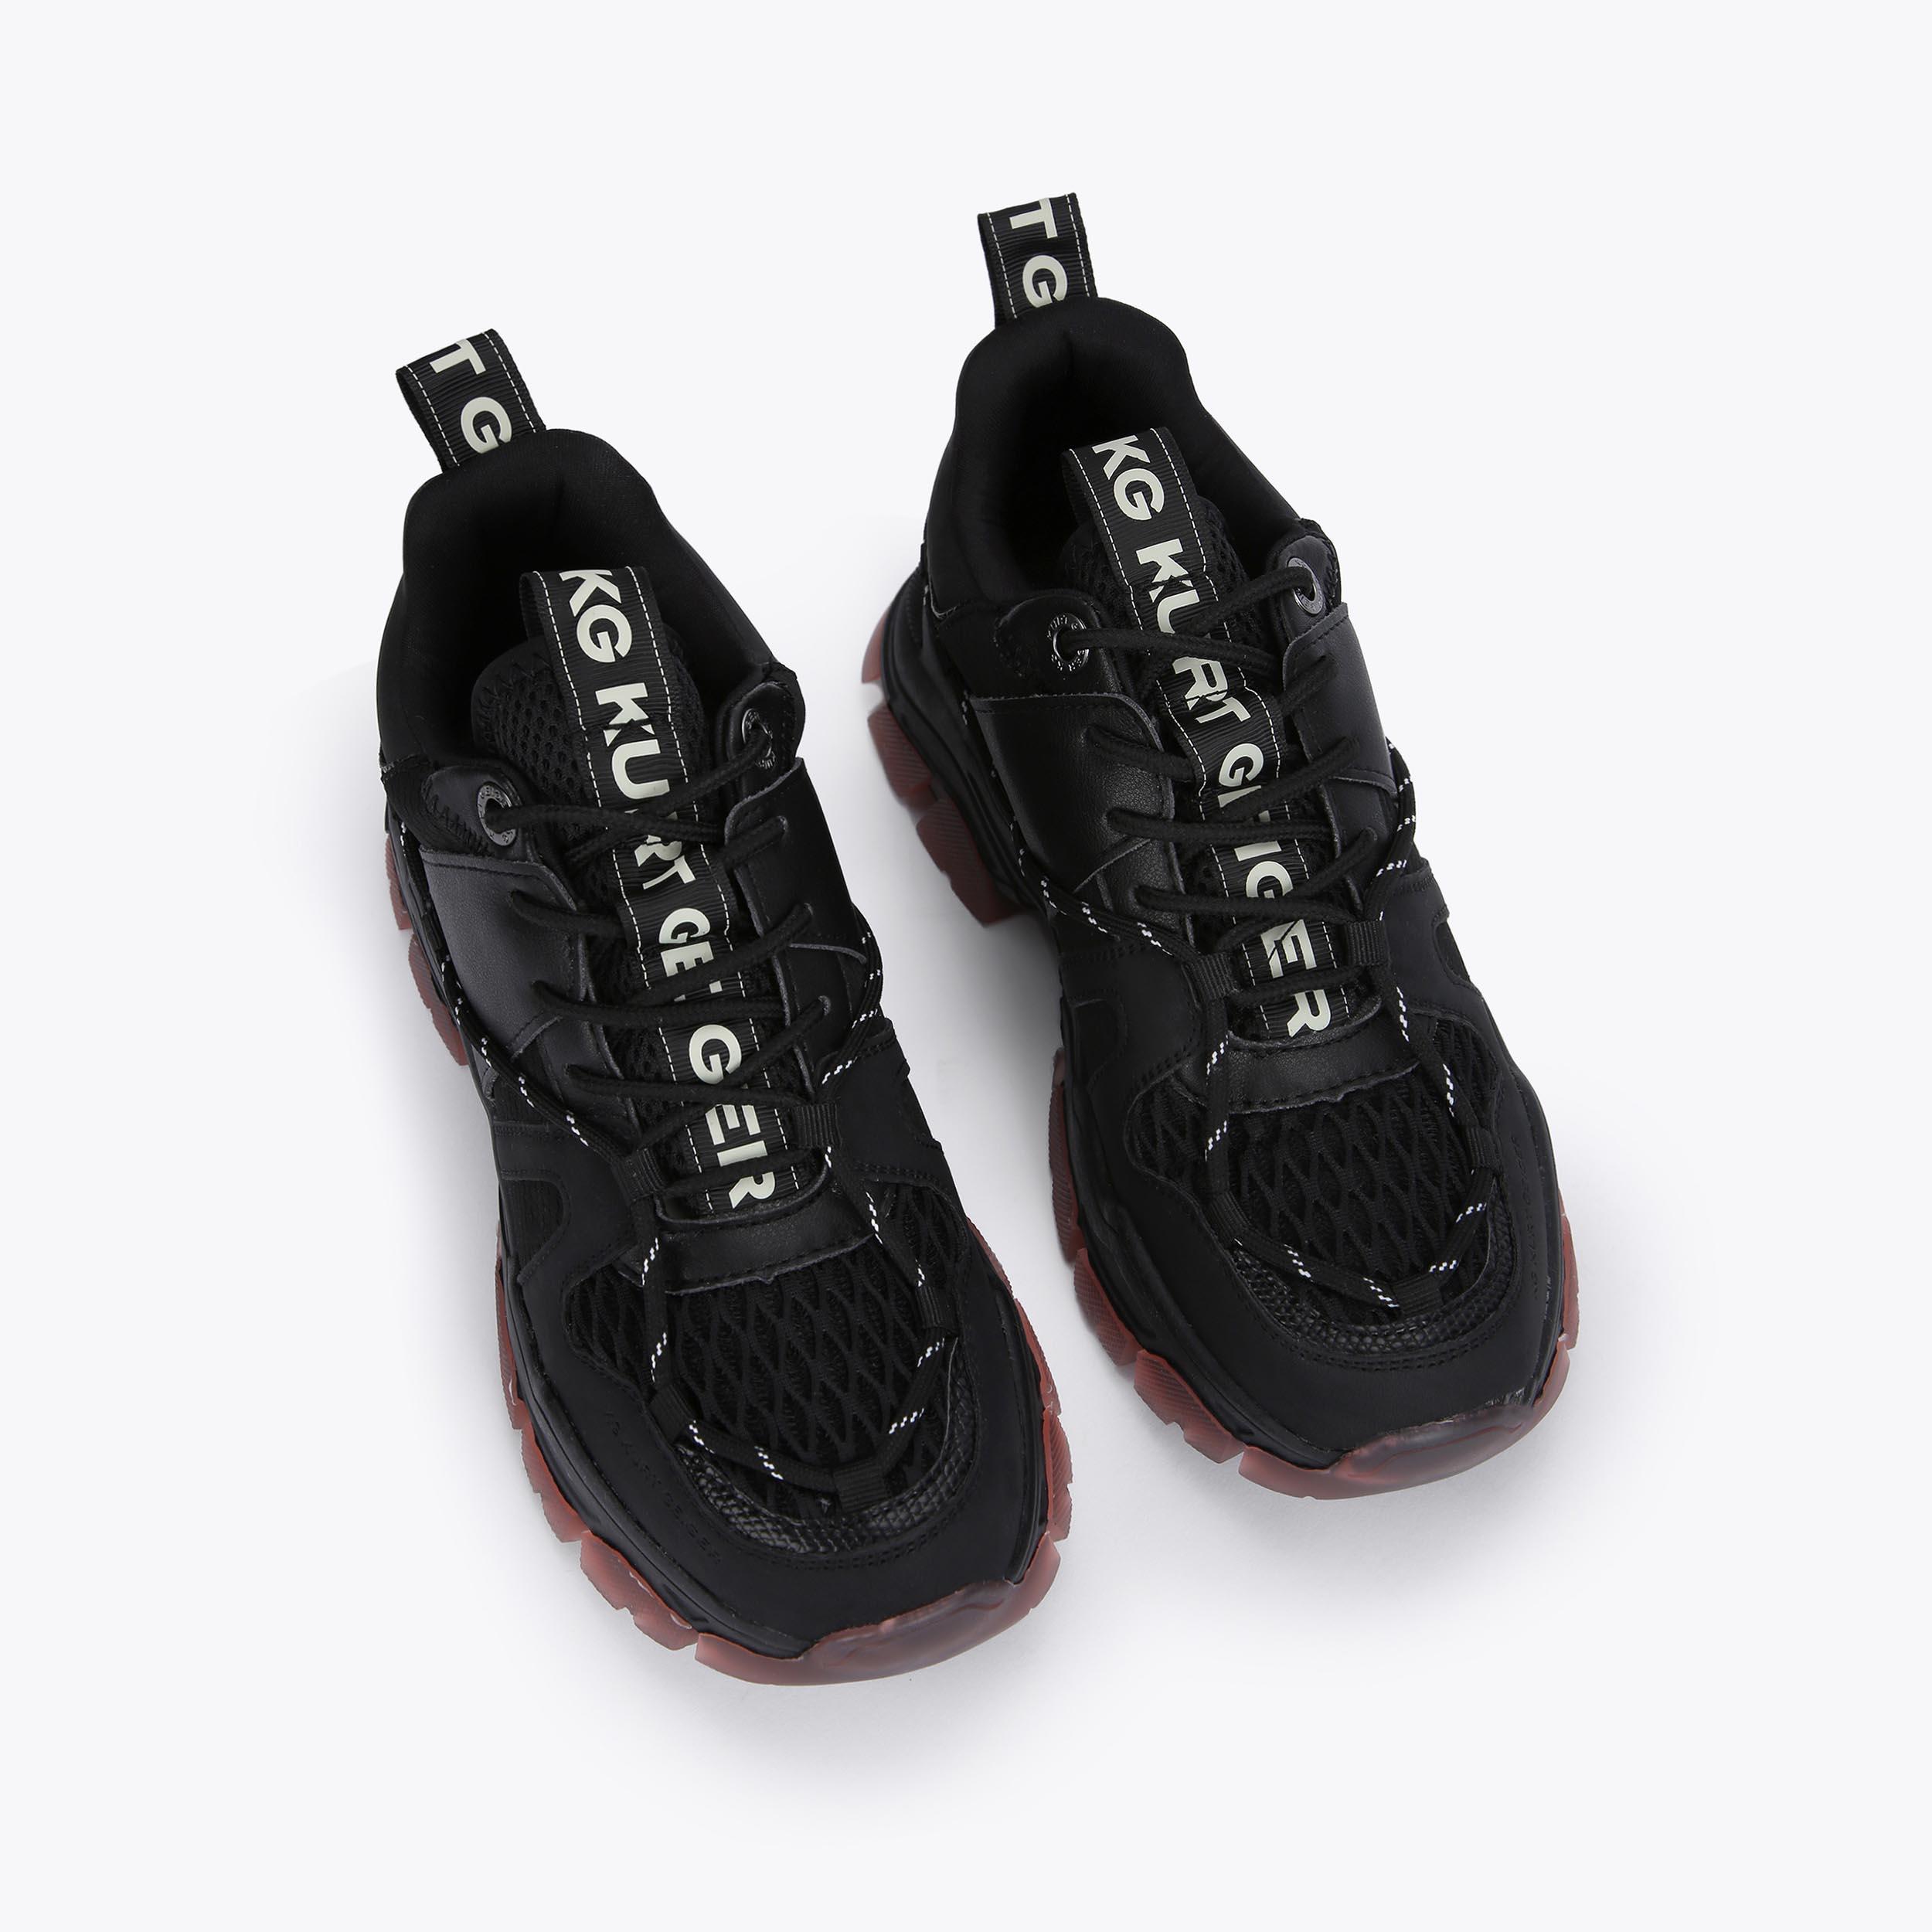 LIMITLESS2 Black Vegan Toggle Sneakers by KG KURT GEIGER